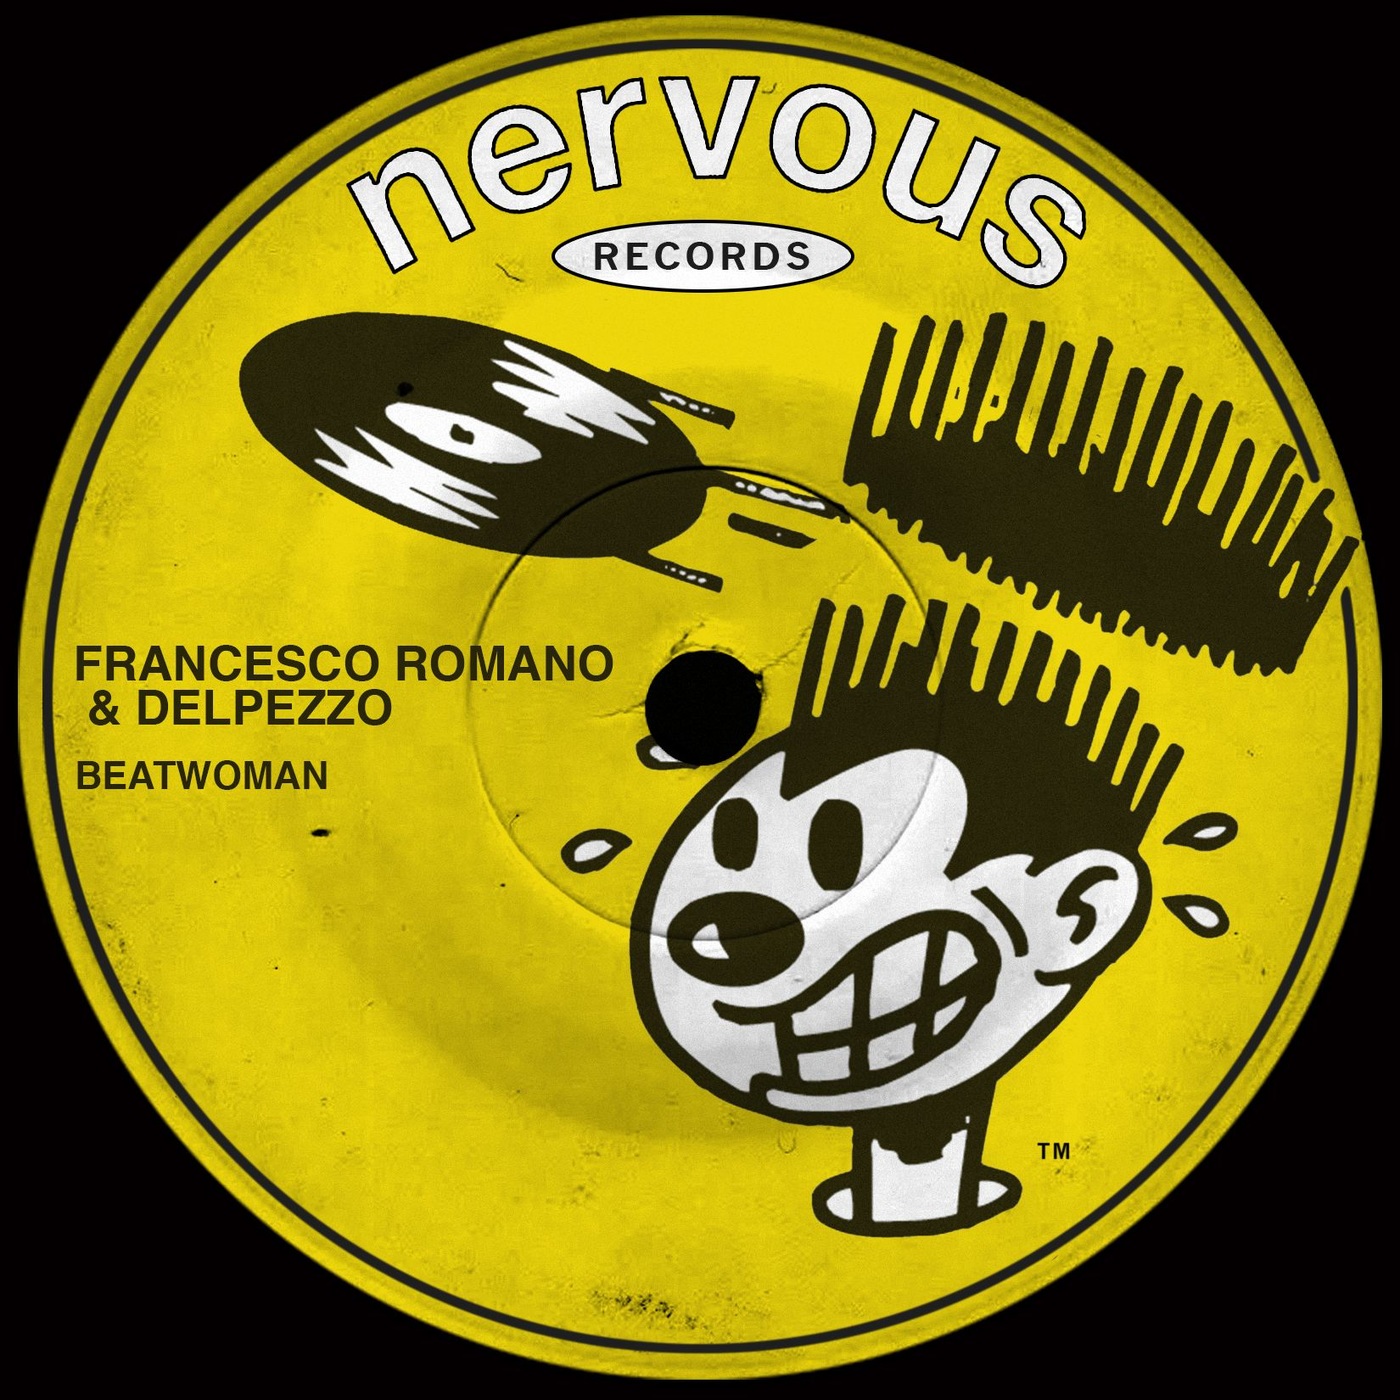 Francesco Romano & Delpezzo - Beatwoman / Nervous Records